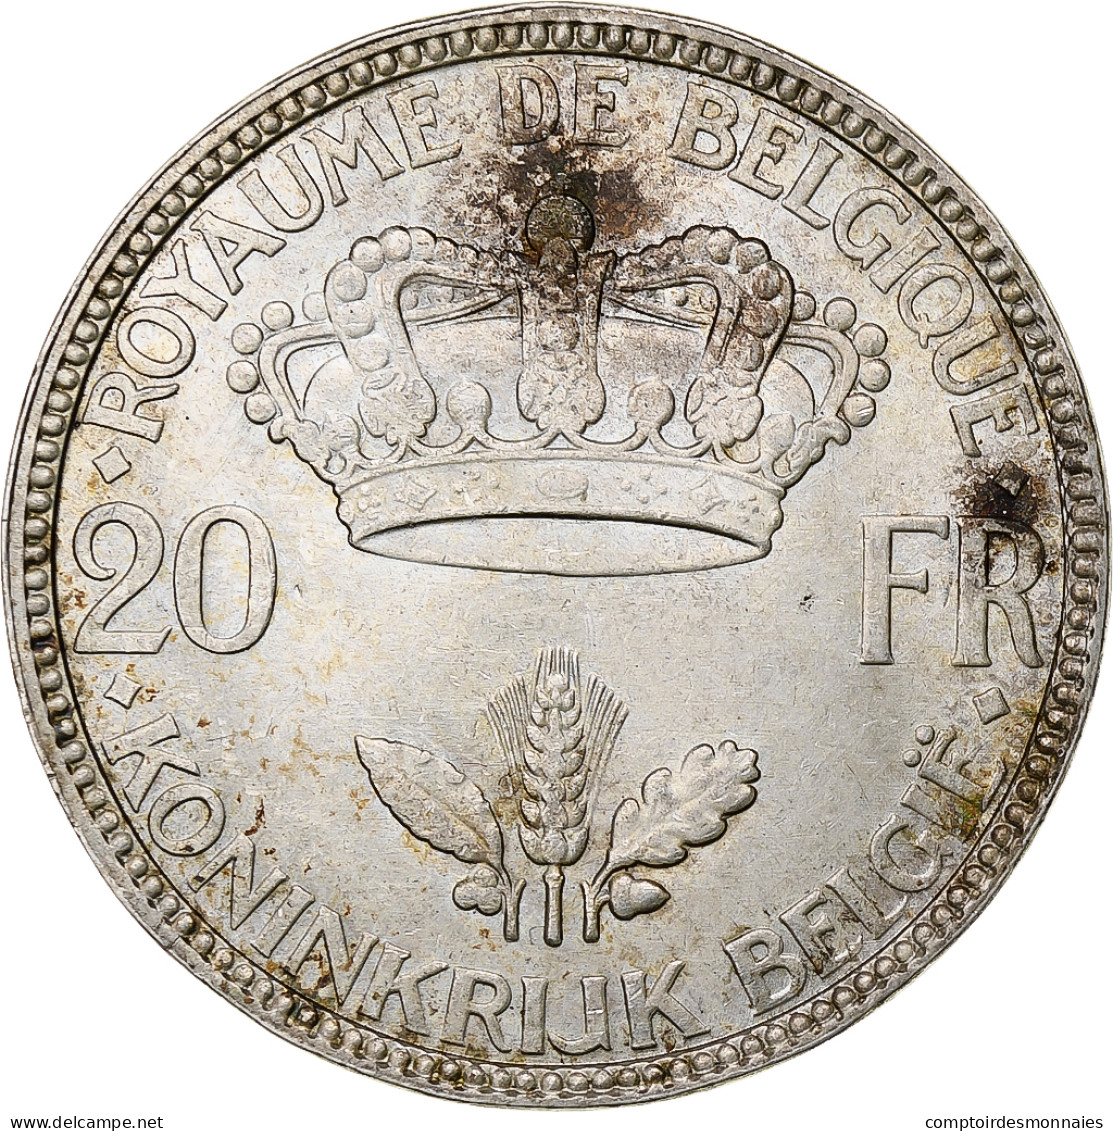 Belgique, 20 Francs, 20 Frank, 1935, Argent, SUP, KM:105 - 20 Francs